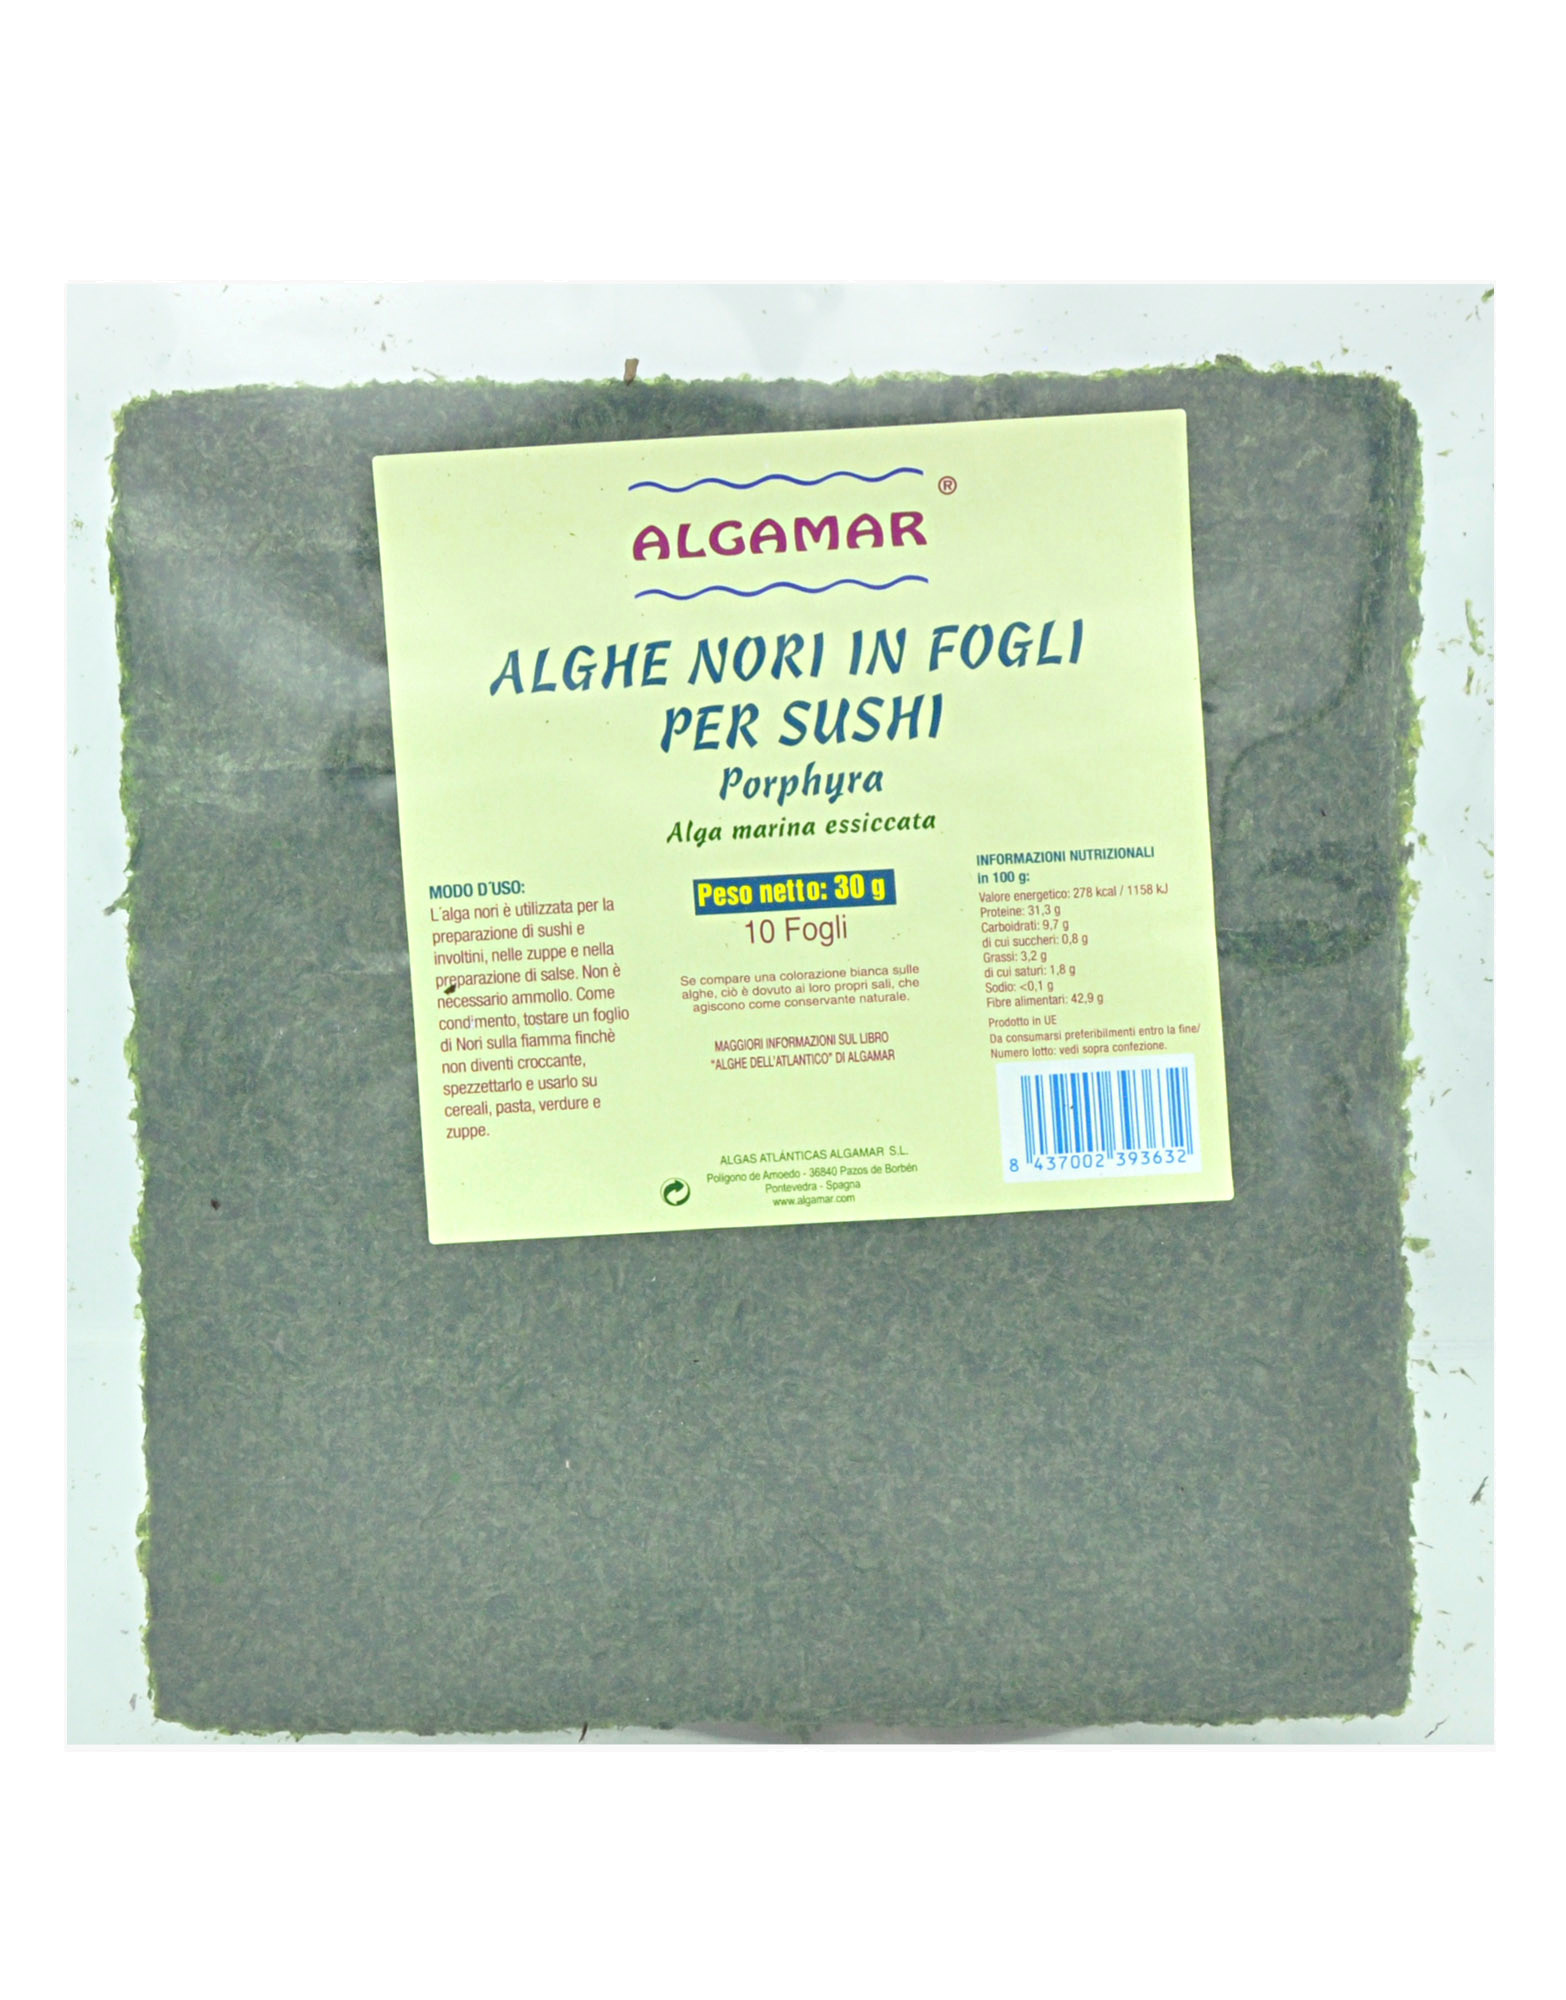 Algamar - Alghe Nori in Fogli per Sushi di Probios, 10 fogli da 3 grammi 